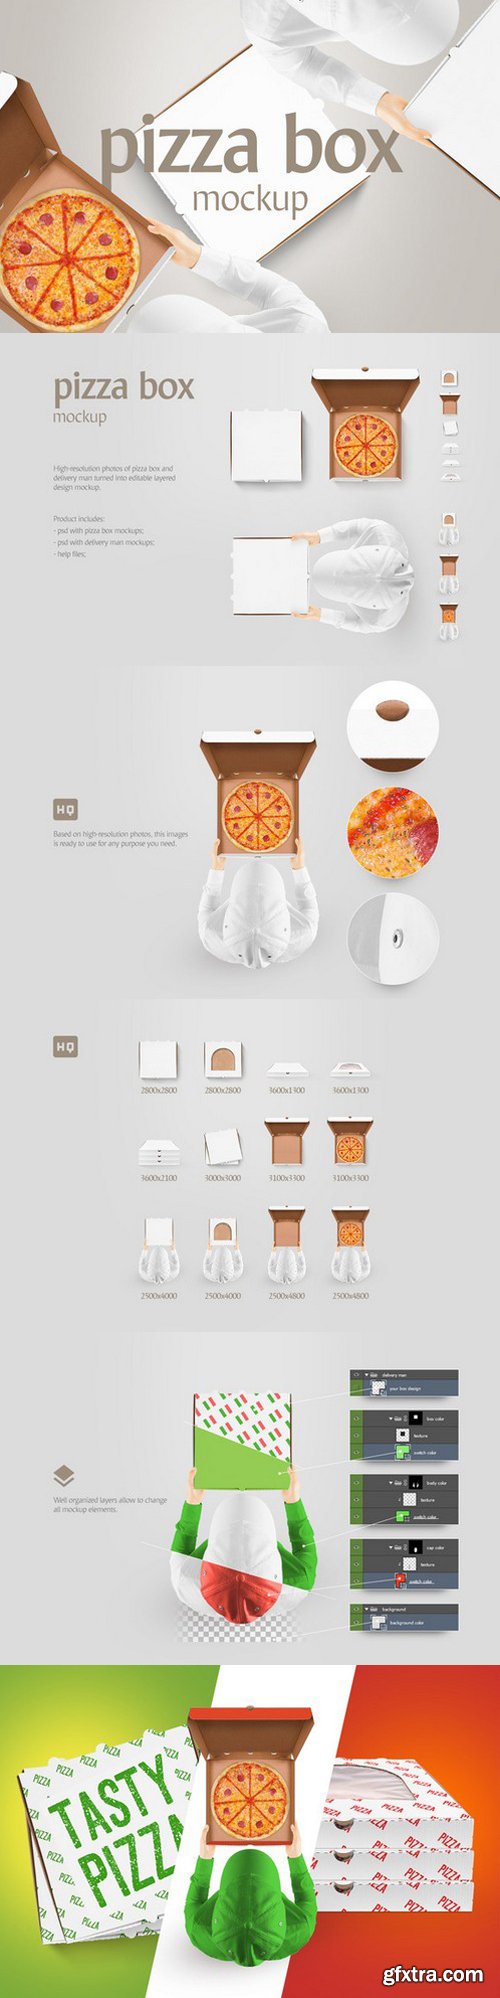 pizza box mockup